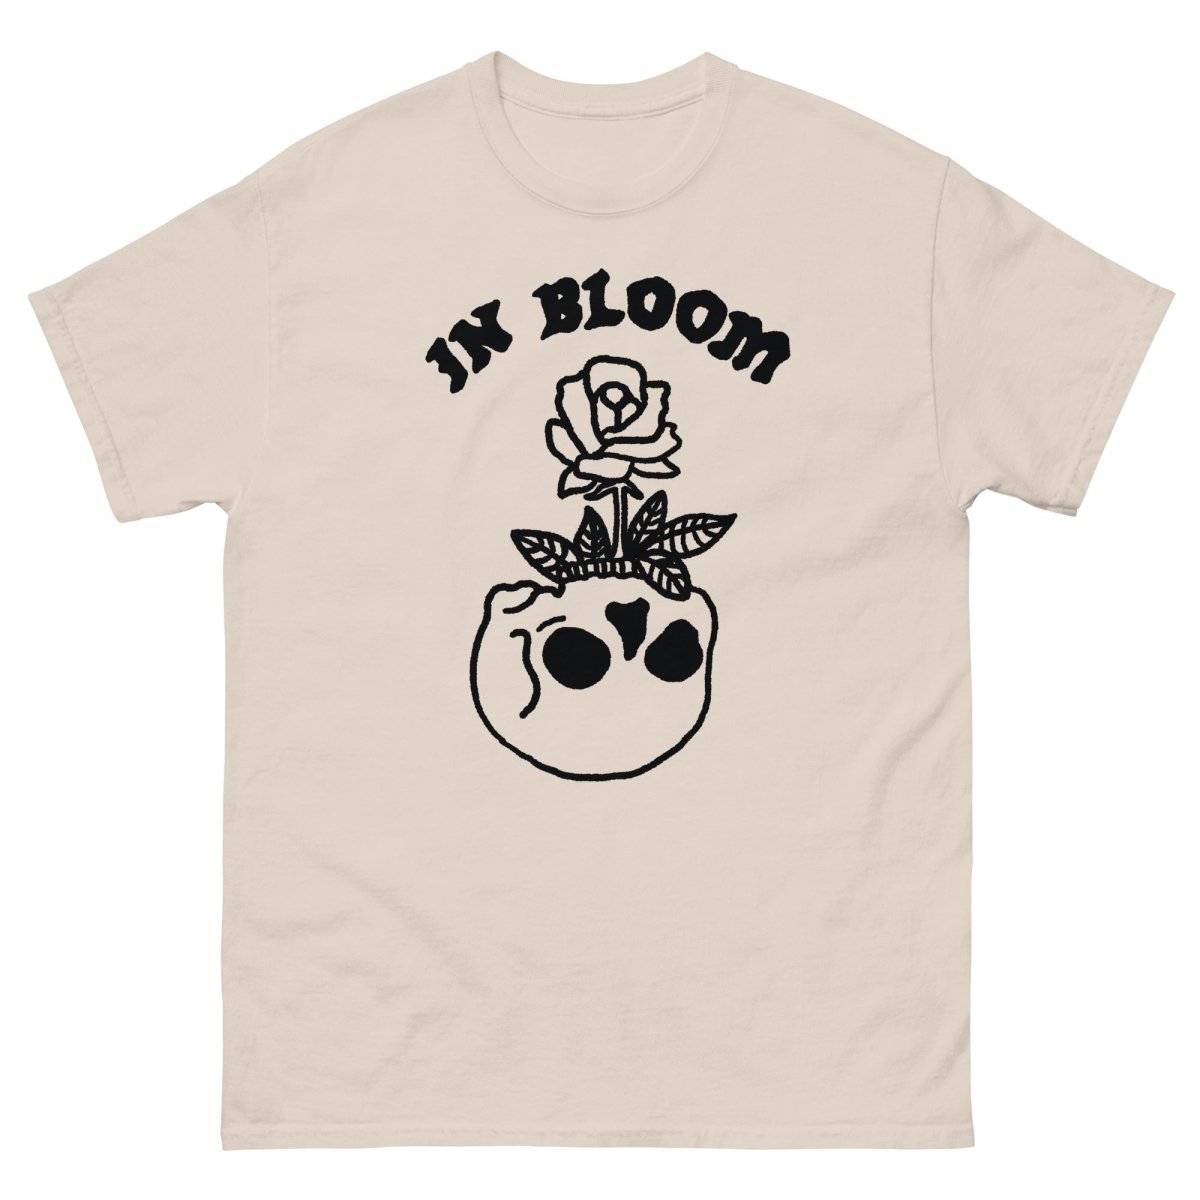 In Bloom classic t-shirt - T-Shirt - Pretty Bad Co.